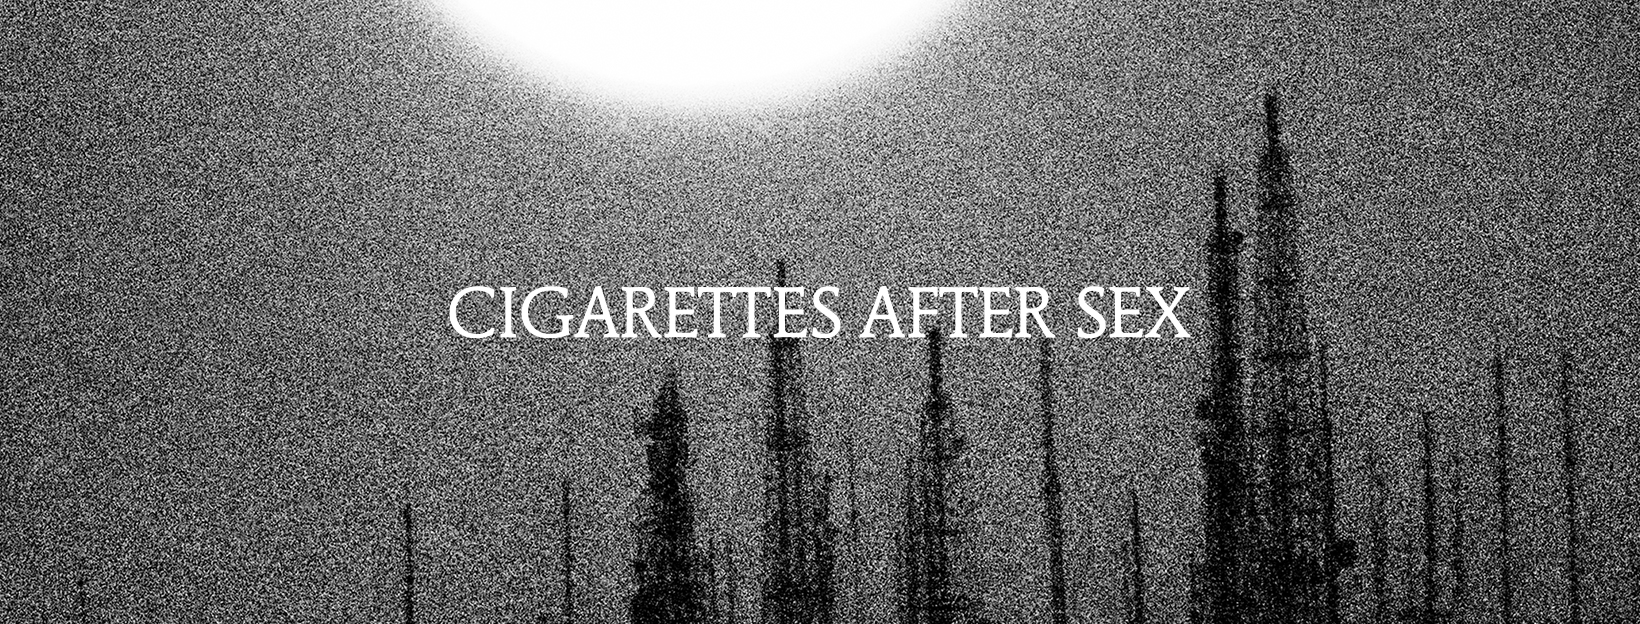 Cigarettes After Sex A Pocos Días Llegar A Gdl 